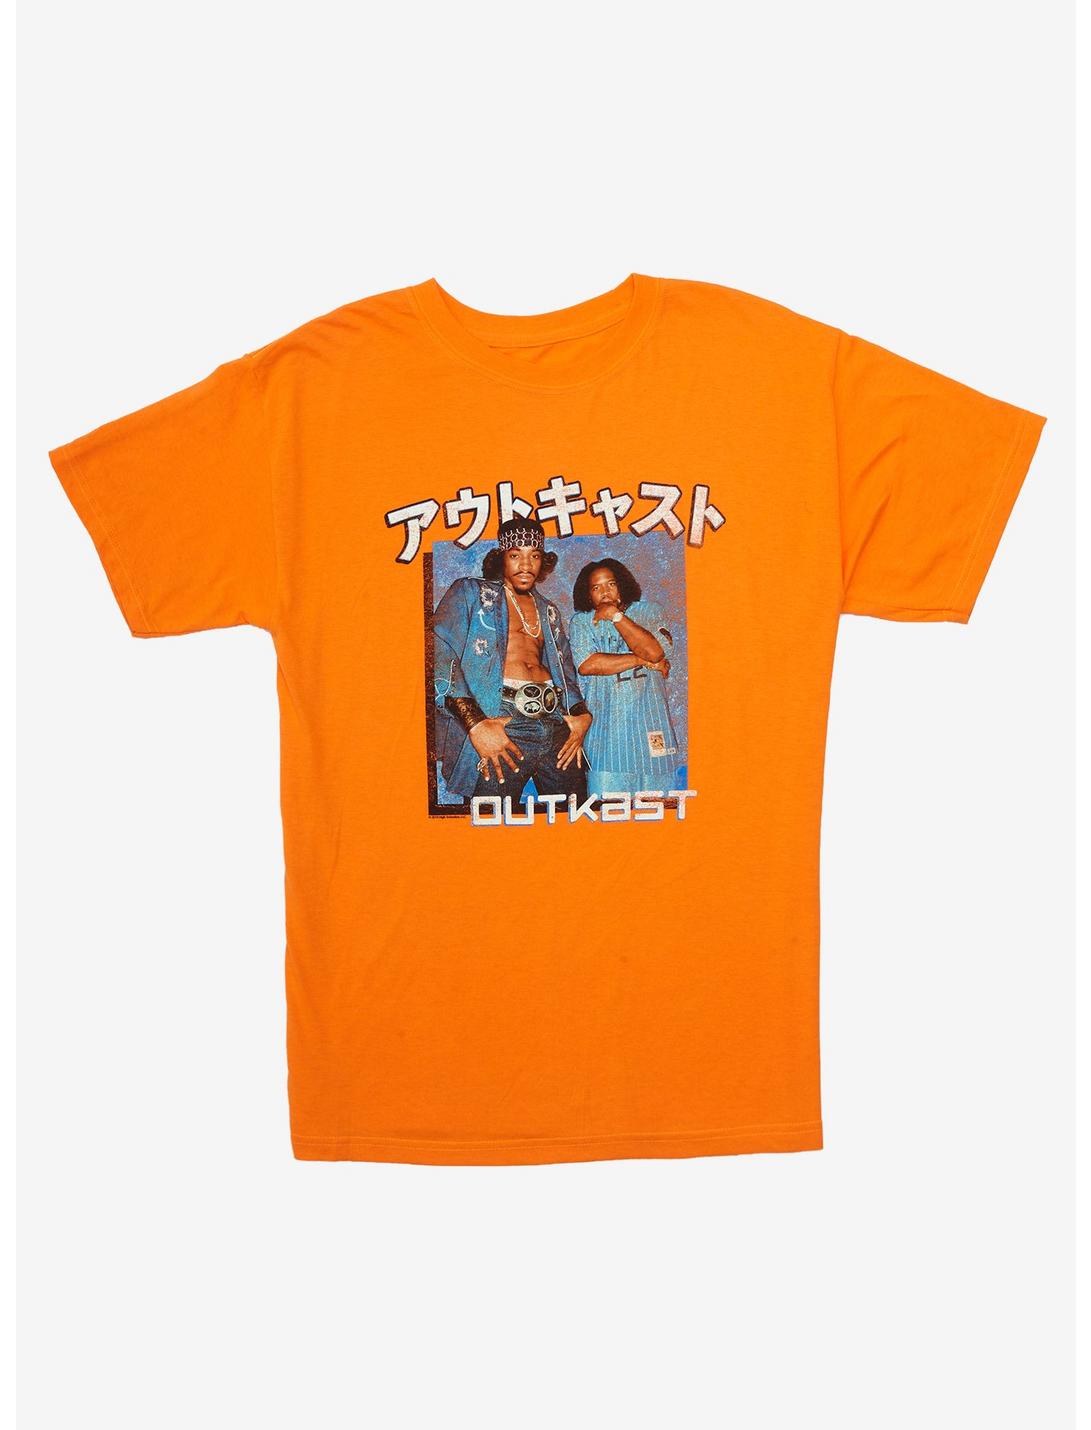 Outkast Orange T-Shirt, ORANGE, hi-res